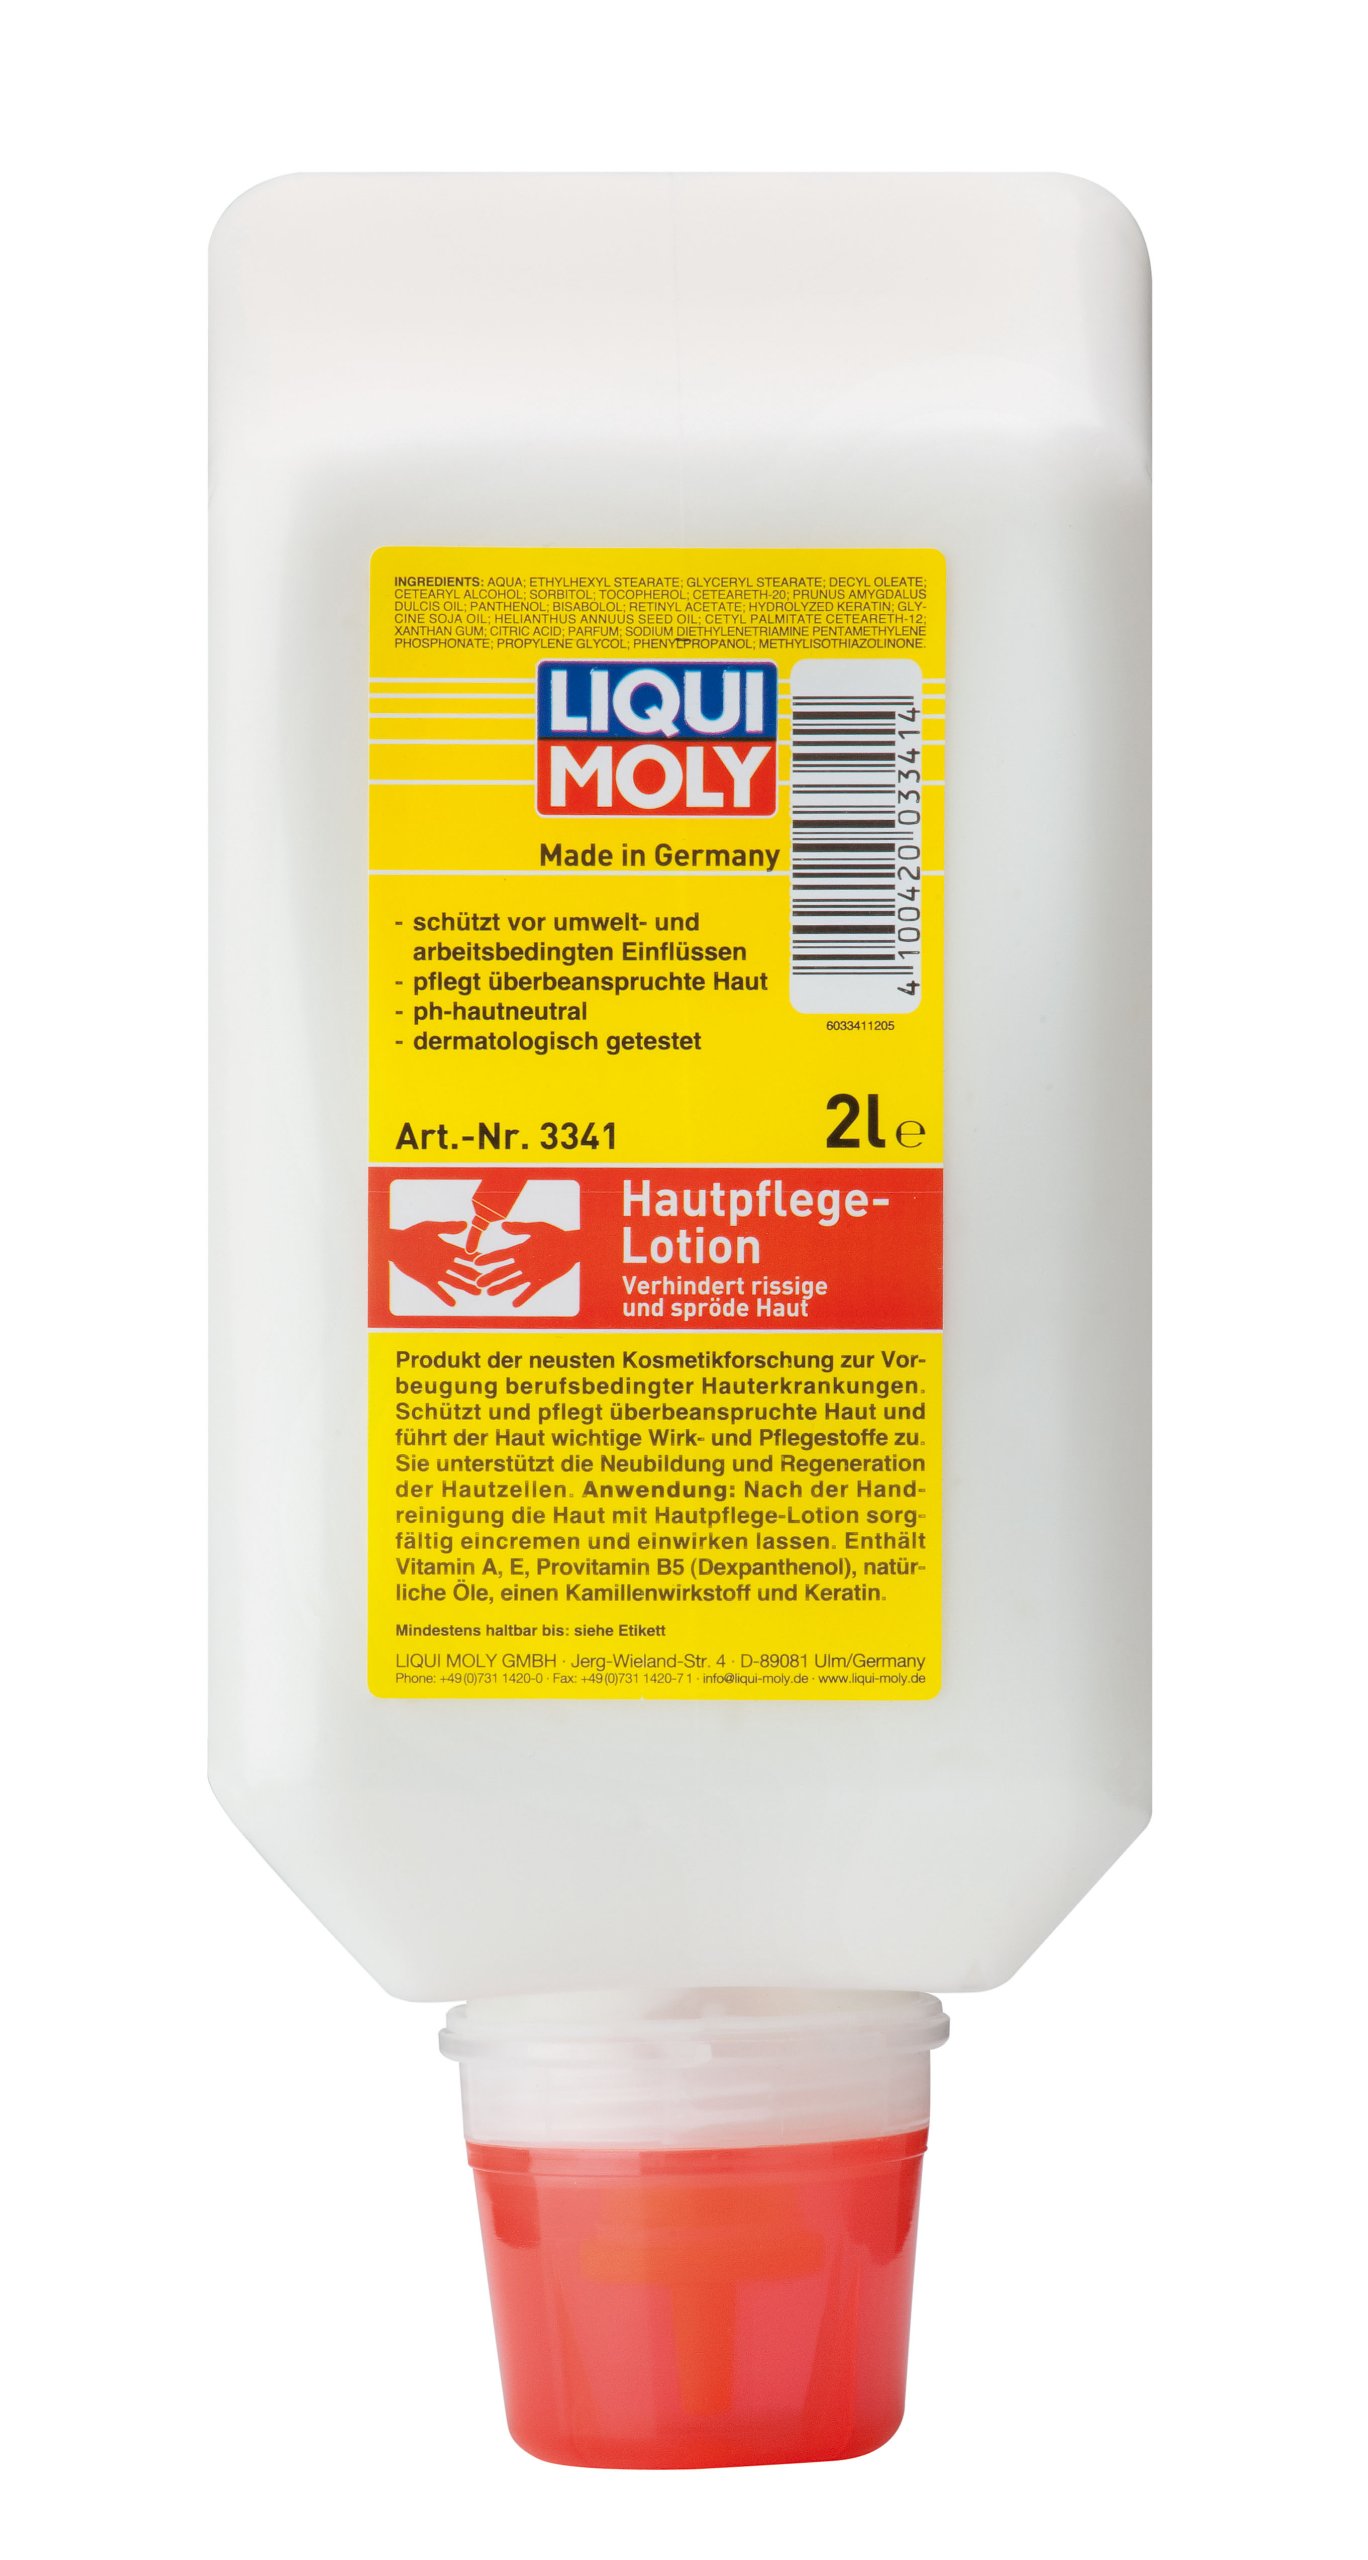 LIQUI MOLY Hautpflege-Lotion | 2 L | Hautpflege | Art.-Nr.: 3341 von Liqui Moly